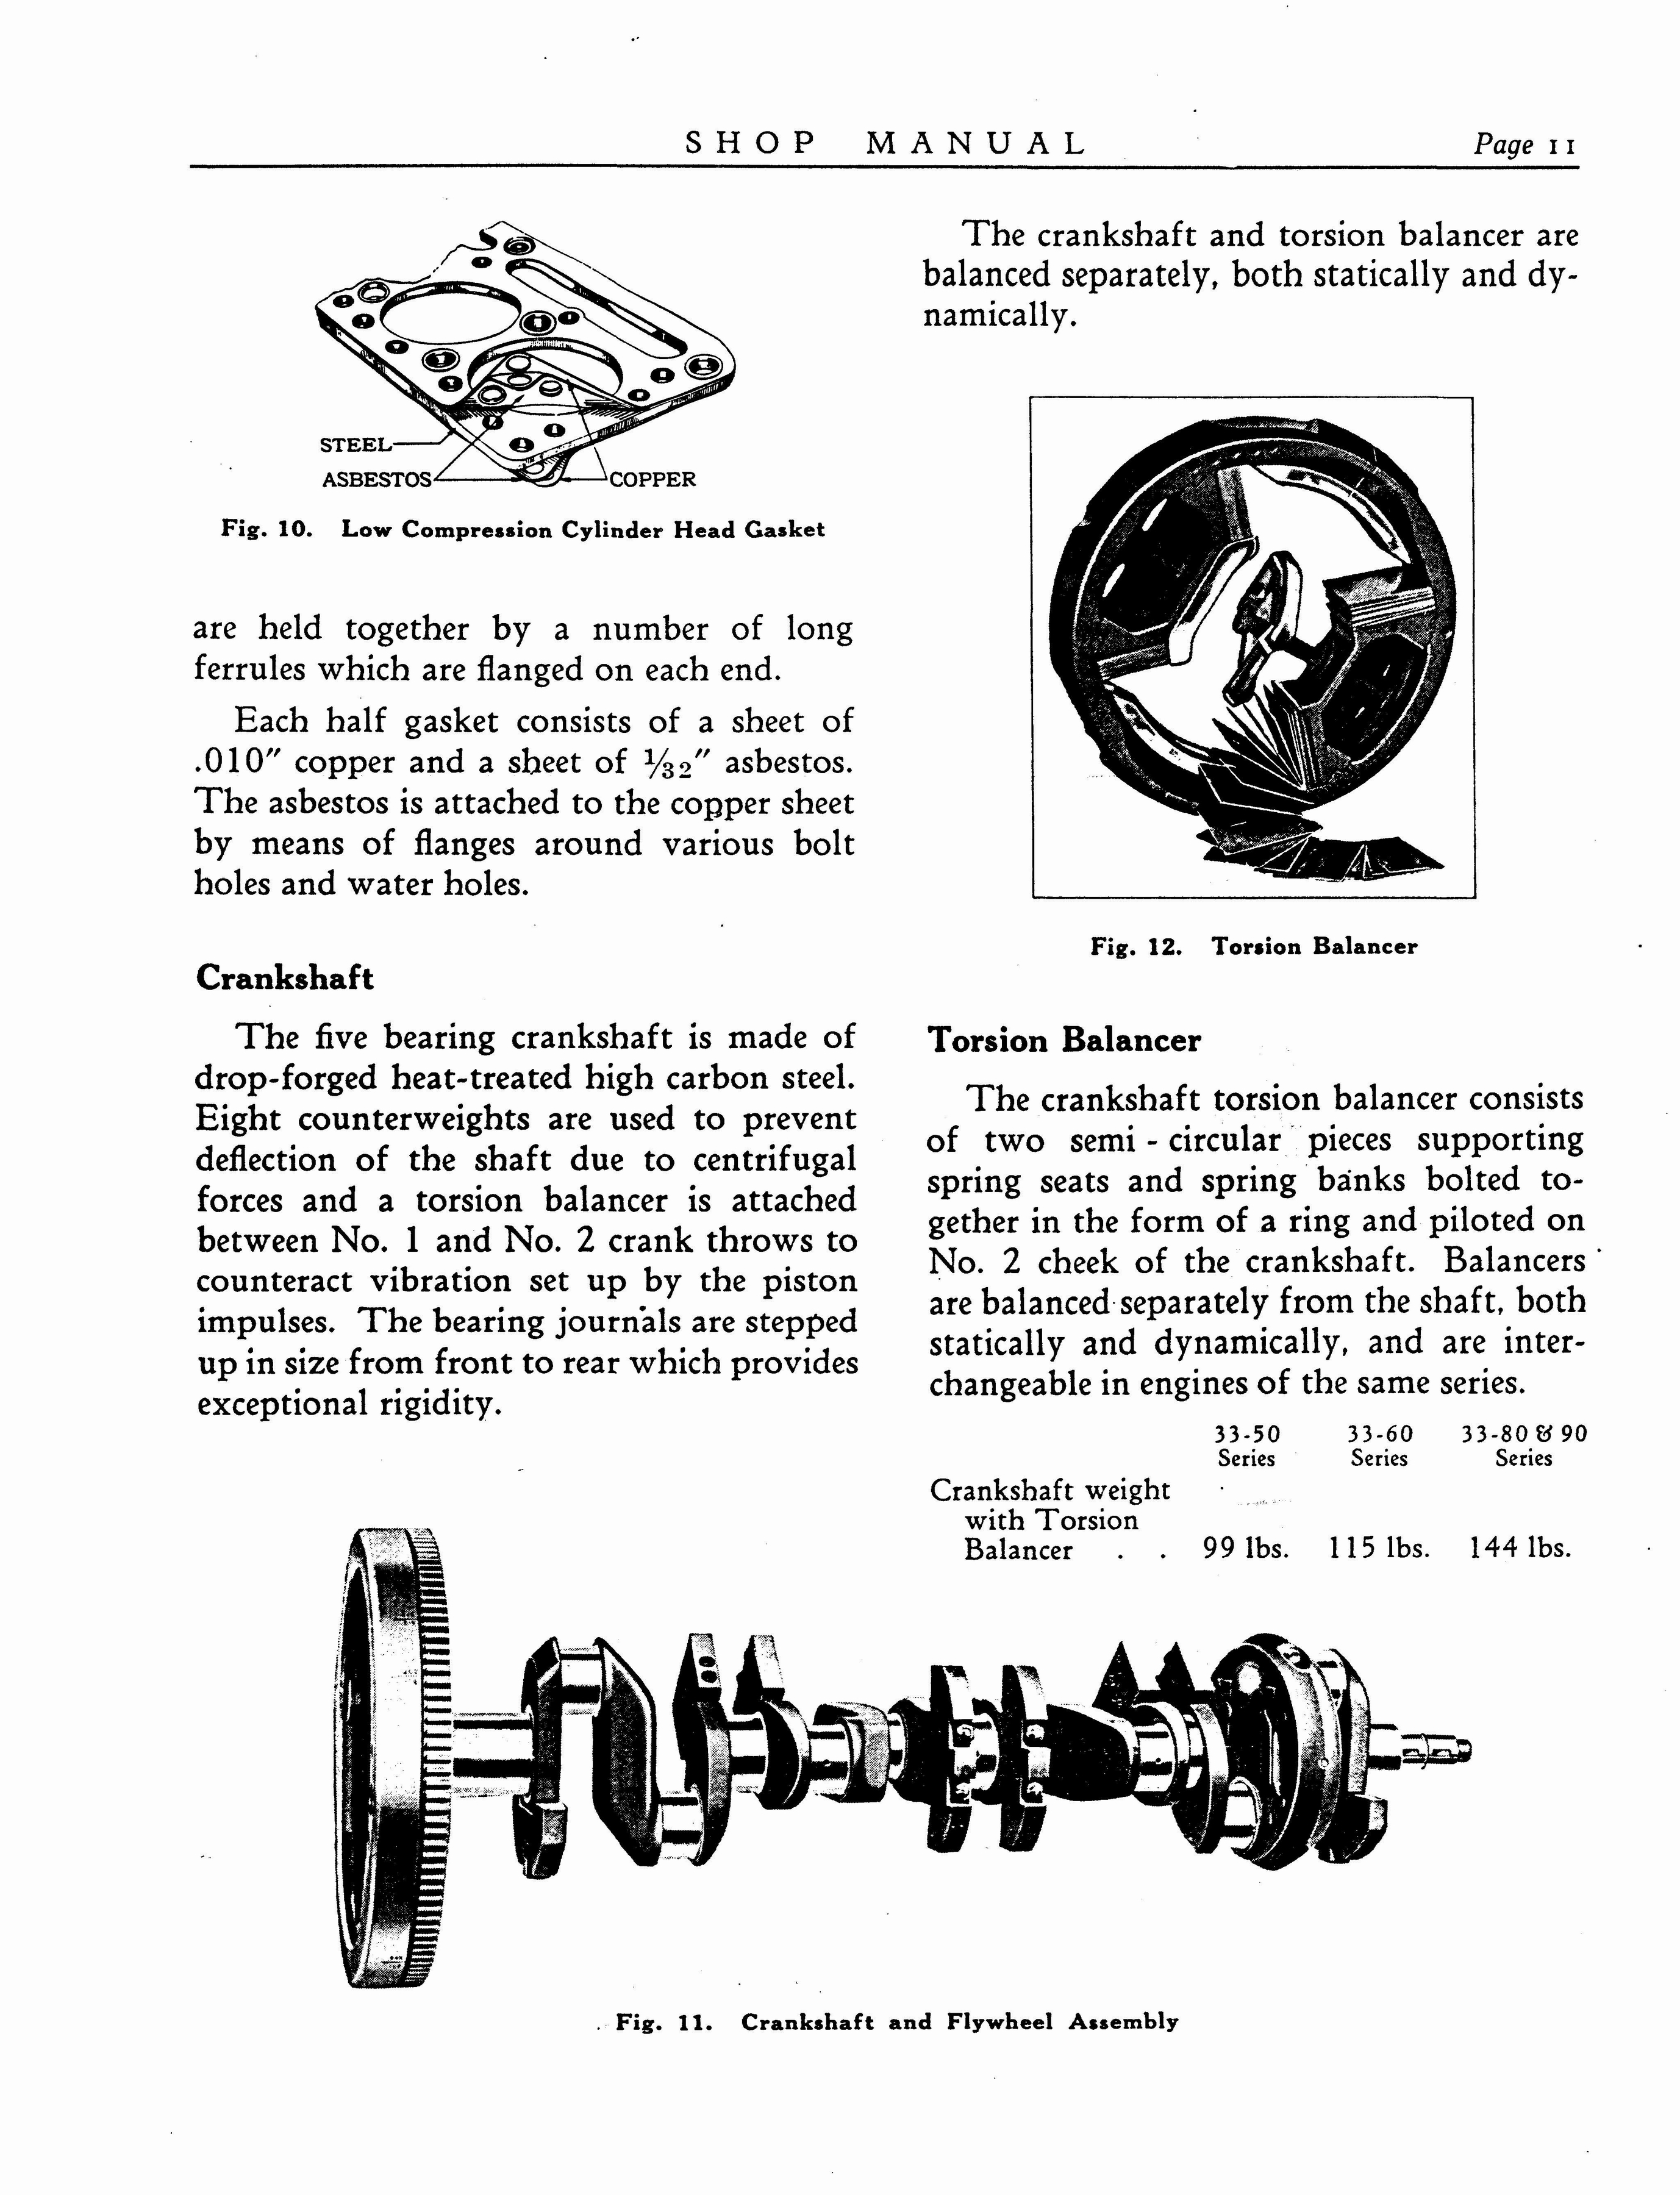 n_1933 Buick Shop Manual_Page_012.jpg